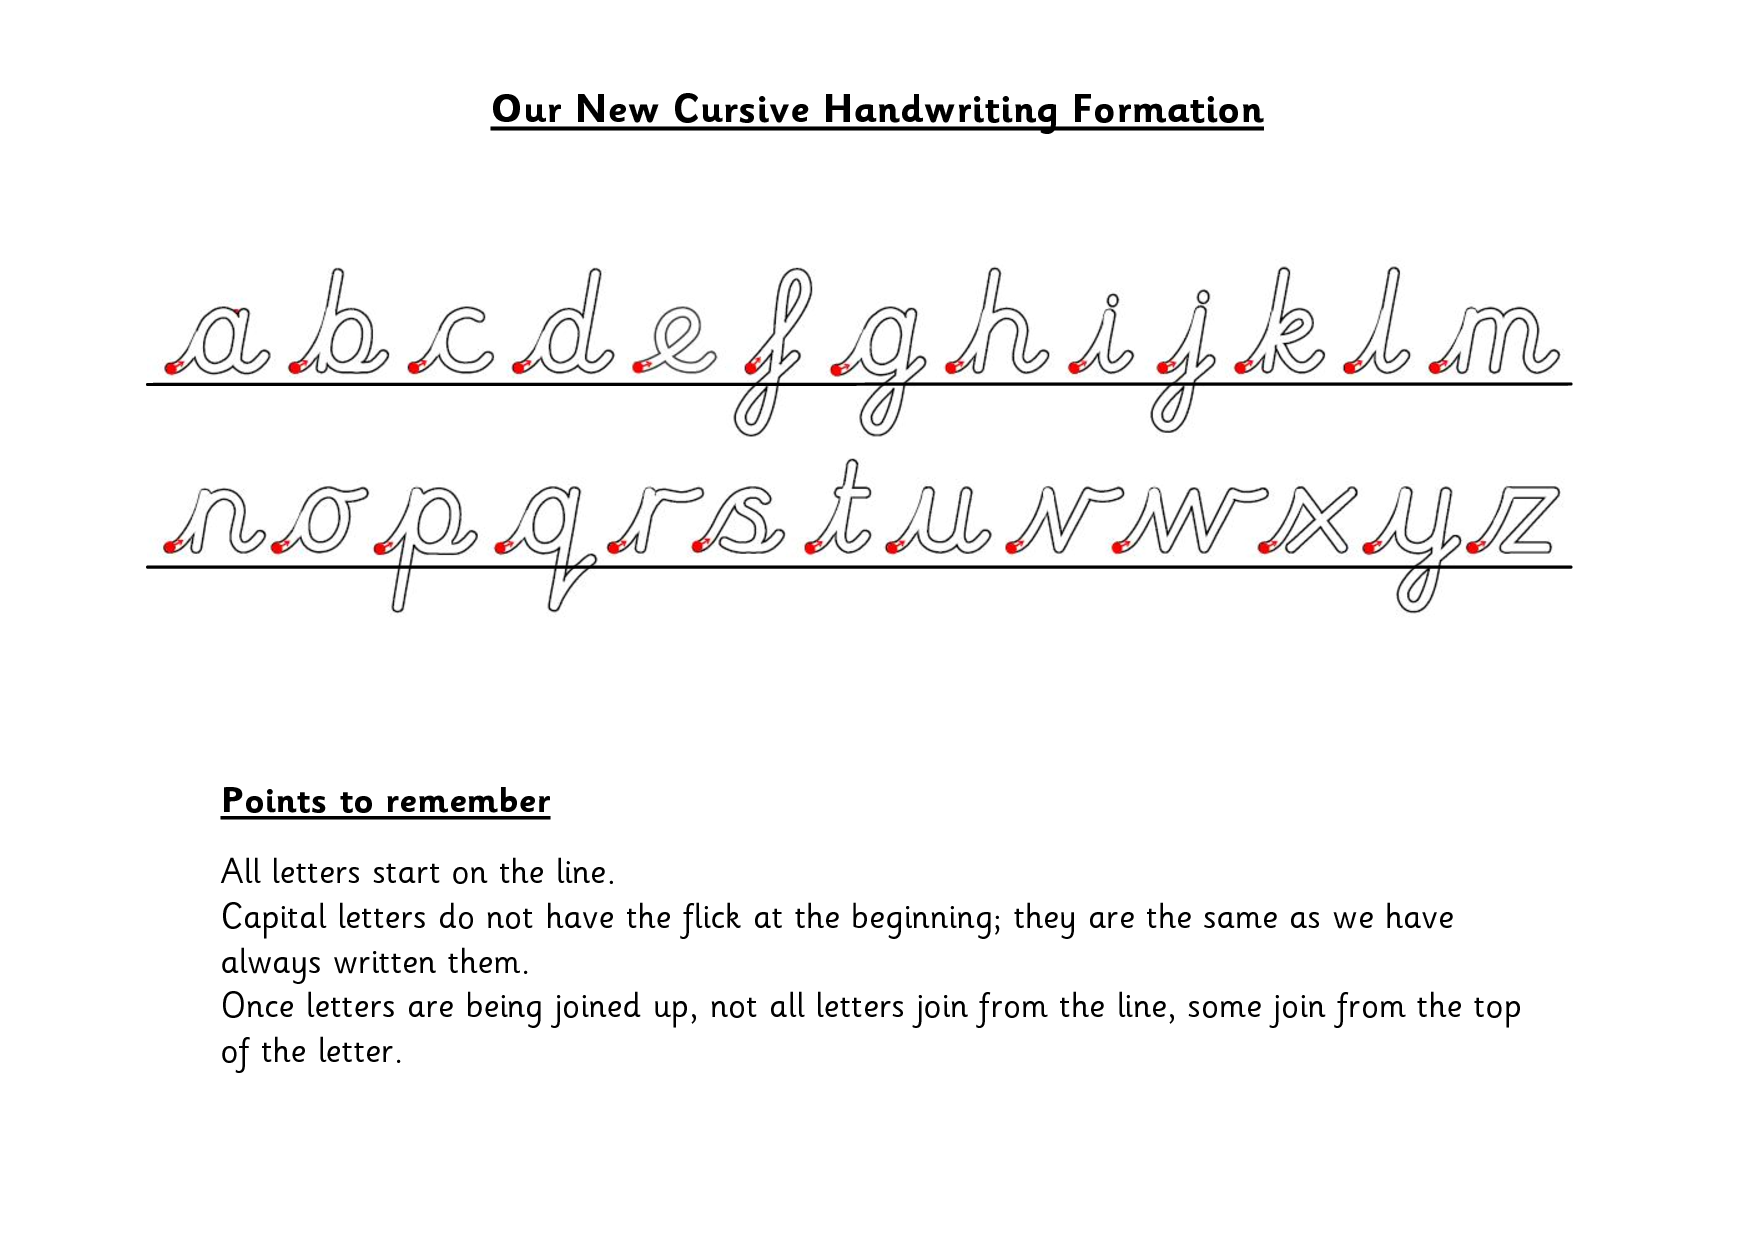 Cursive Handwriting Letter Formation Image